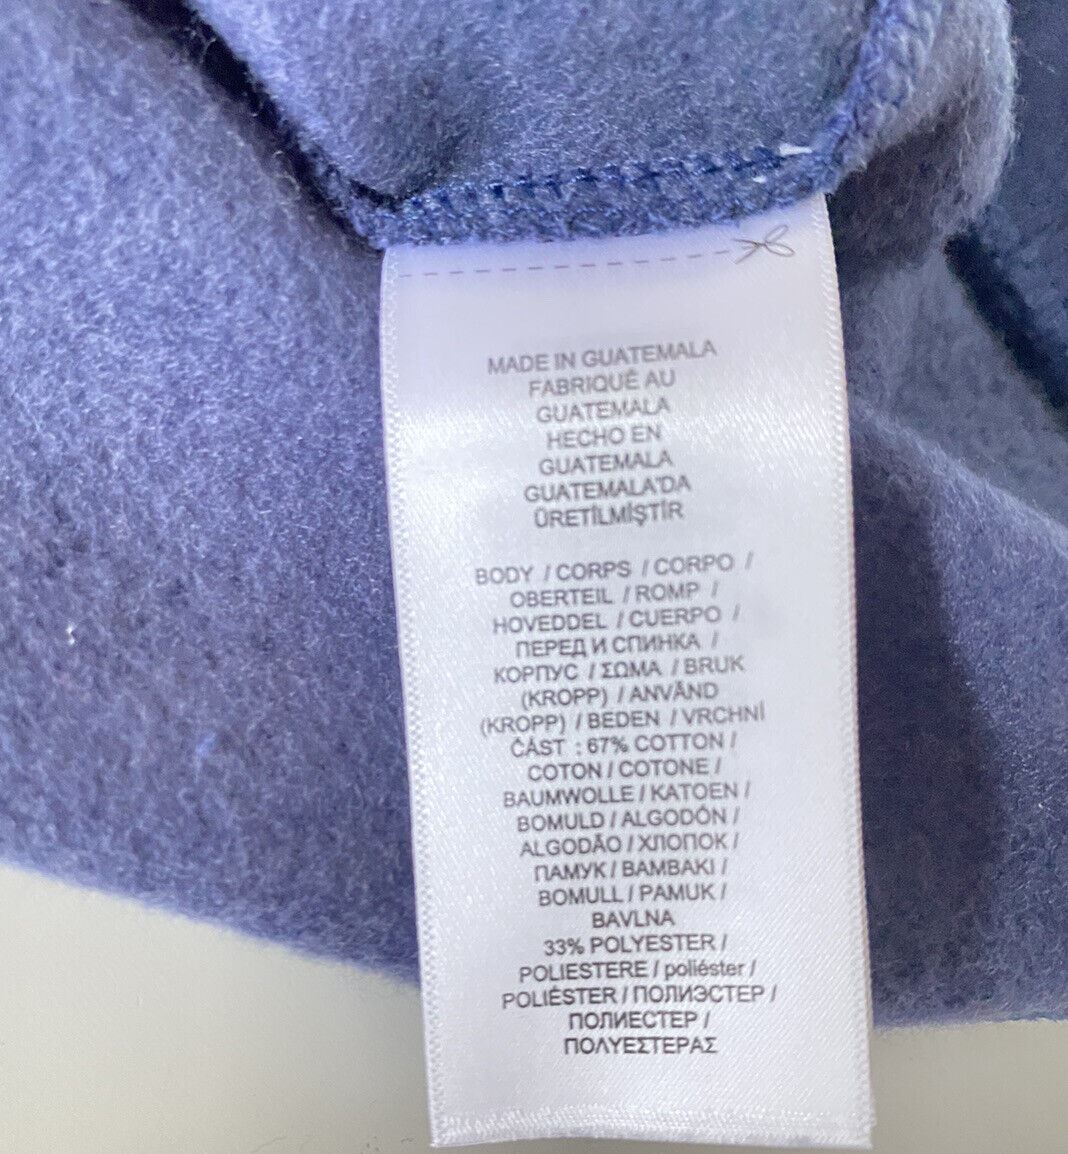 Neu mit Etikett: 110 $ Polo Ralph Lauren Polo-Logo-Fleece-Sweatshirt Marineblau L/G 